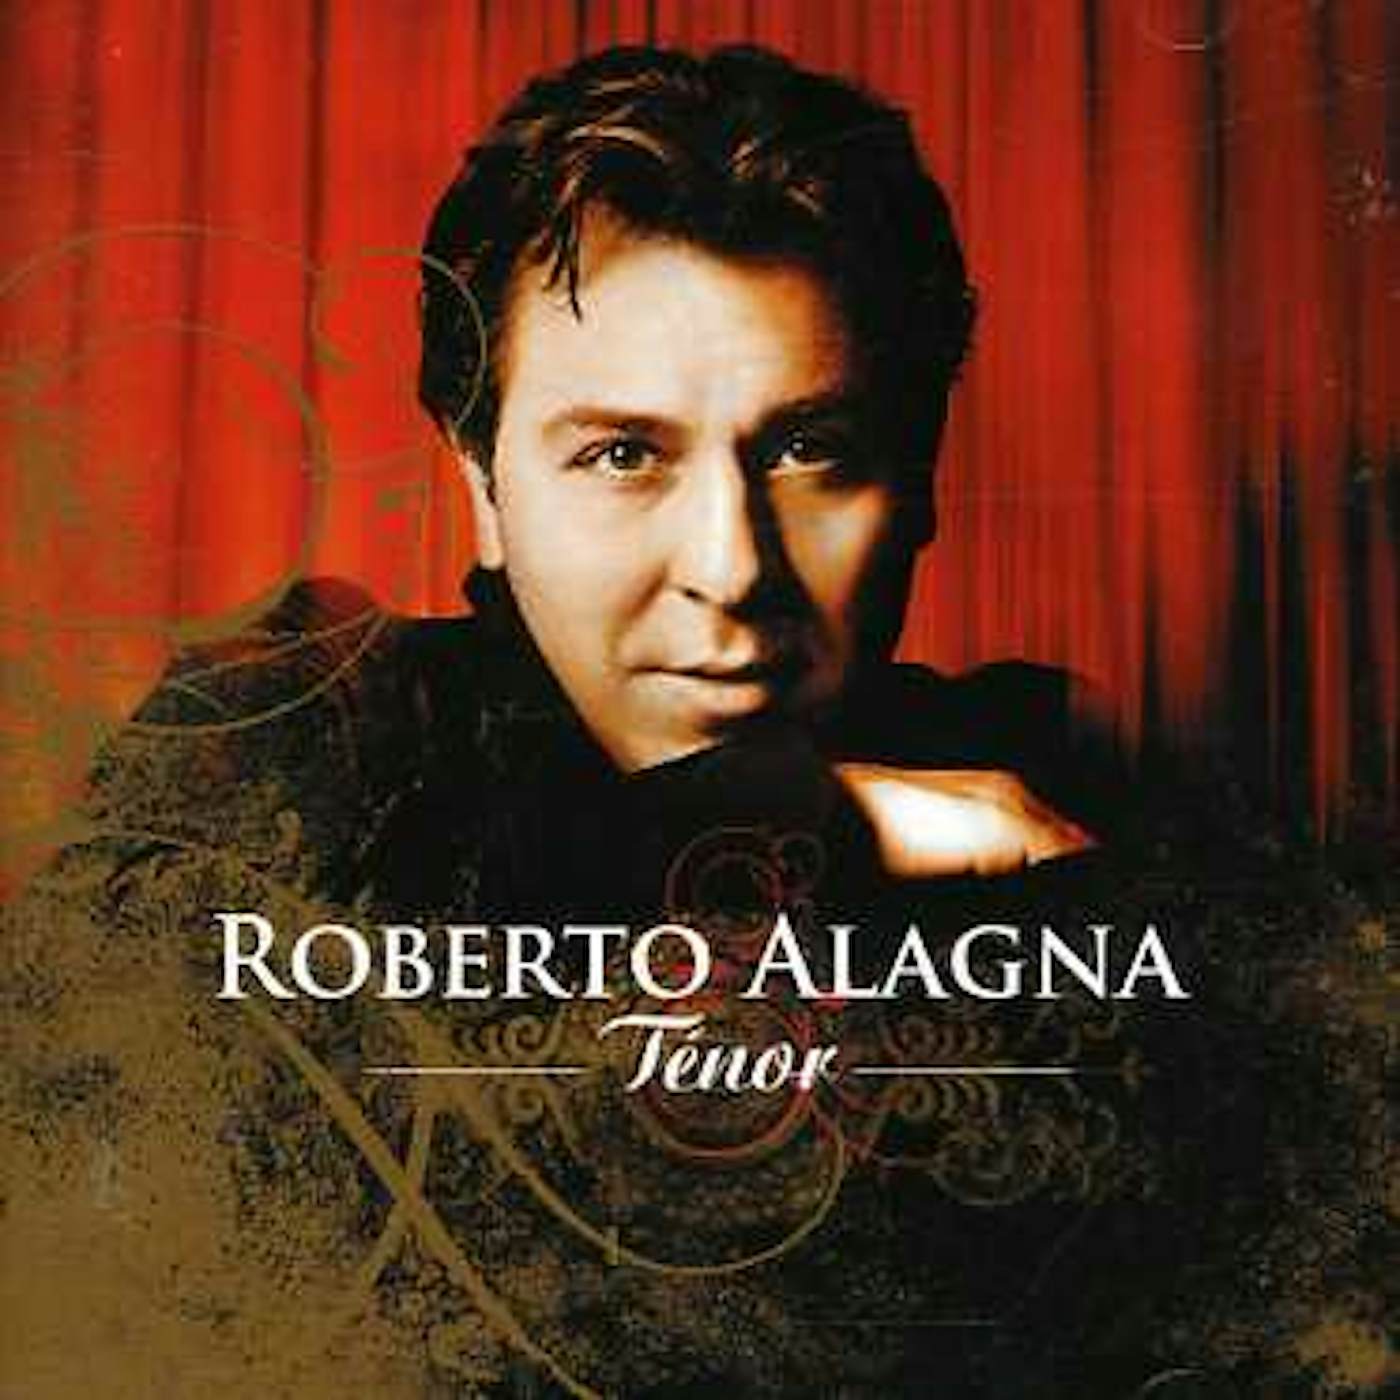 Roberto Alagna TENOR CD